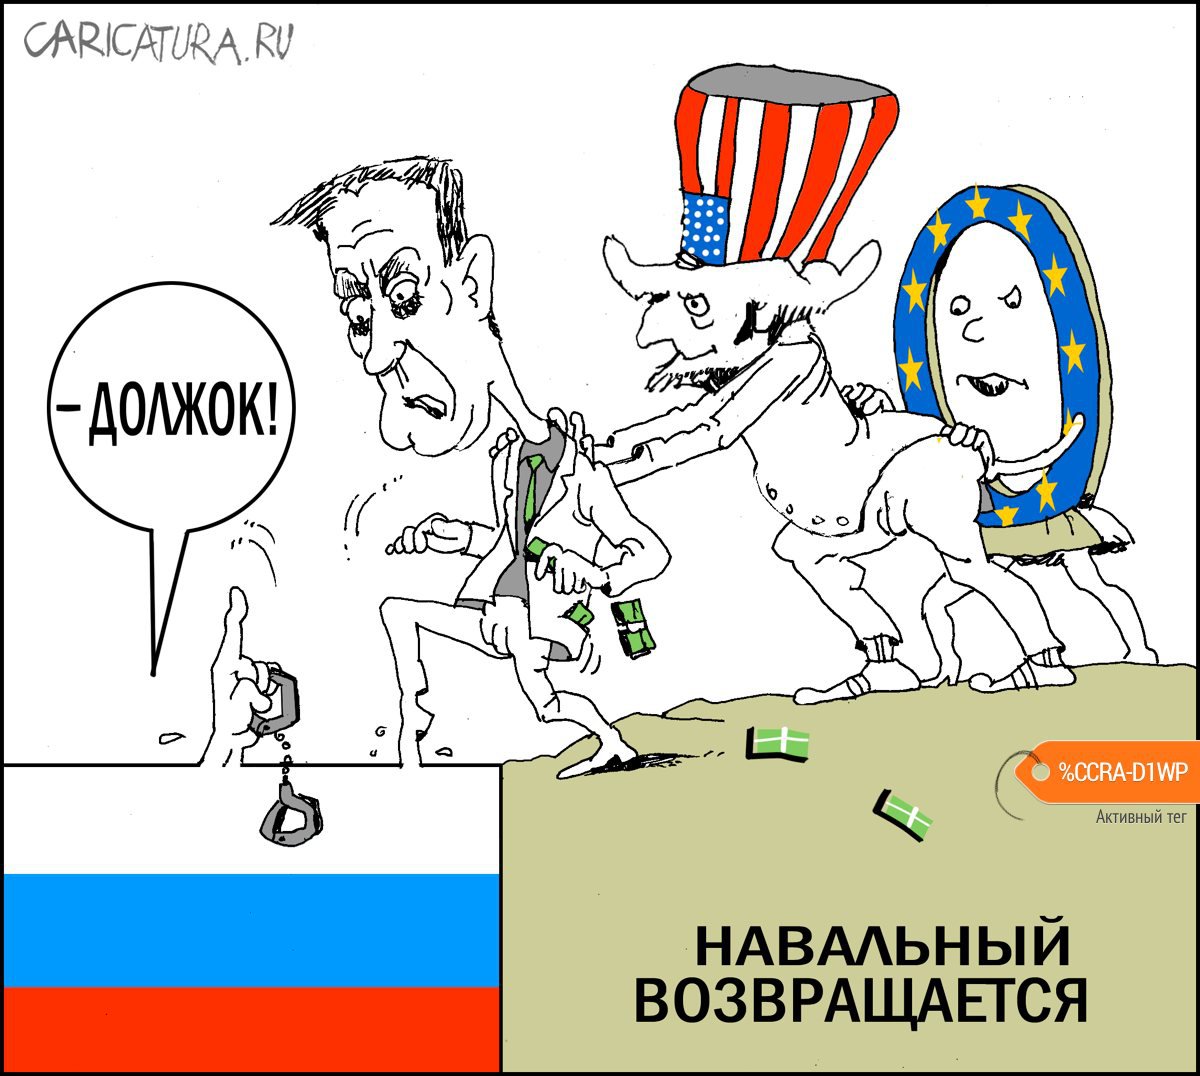 Карикатура "Возвращение", Александр Уваров